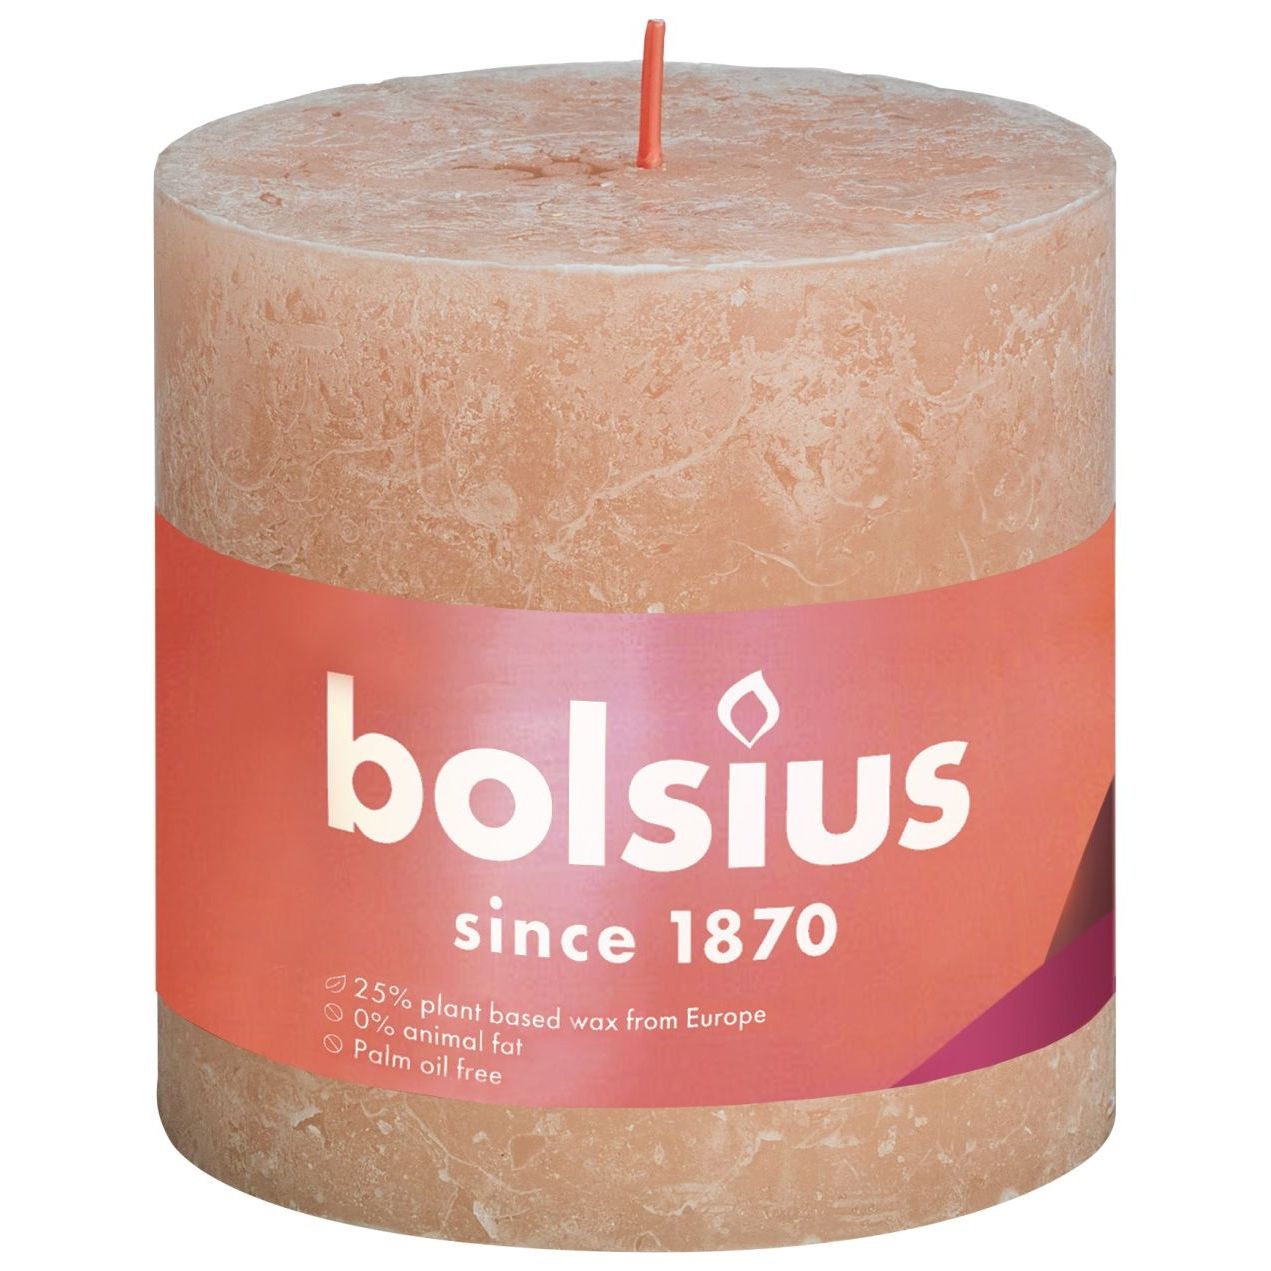 Bolsius Rustiek Stompkaars Shine Collection 100/100 Misty Pink -Nevelig Roze